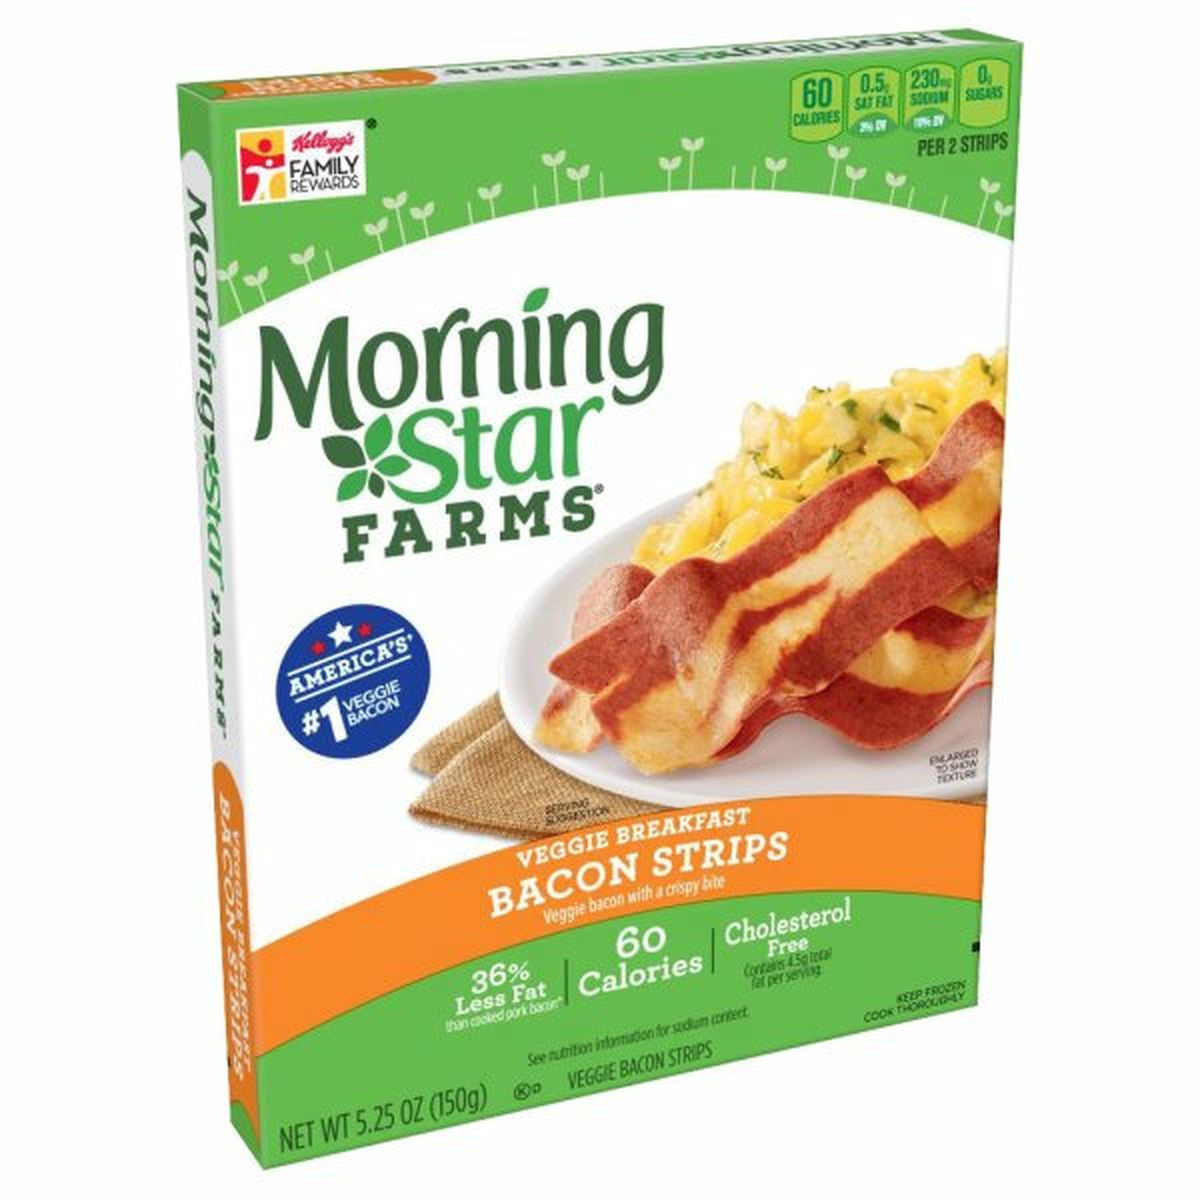 Calories in Morning Star Farms Veggie Morningstar Farms, Veggie Breakfast, Veggie Bacon Strips, Vegetarian